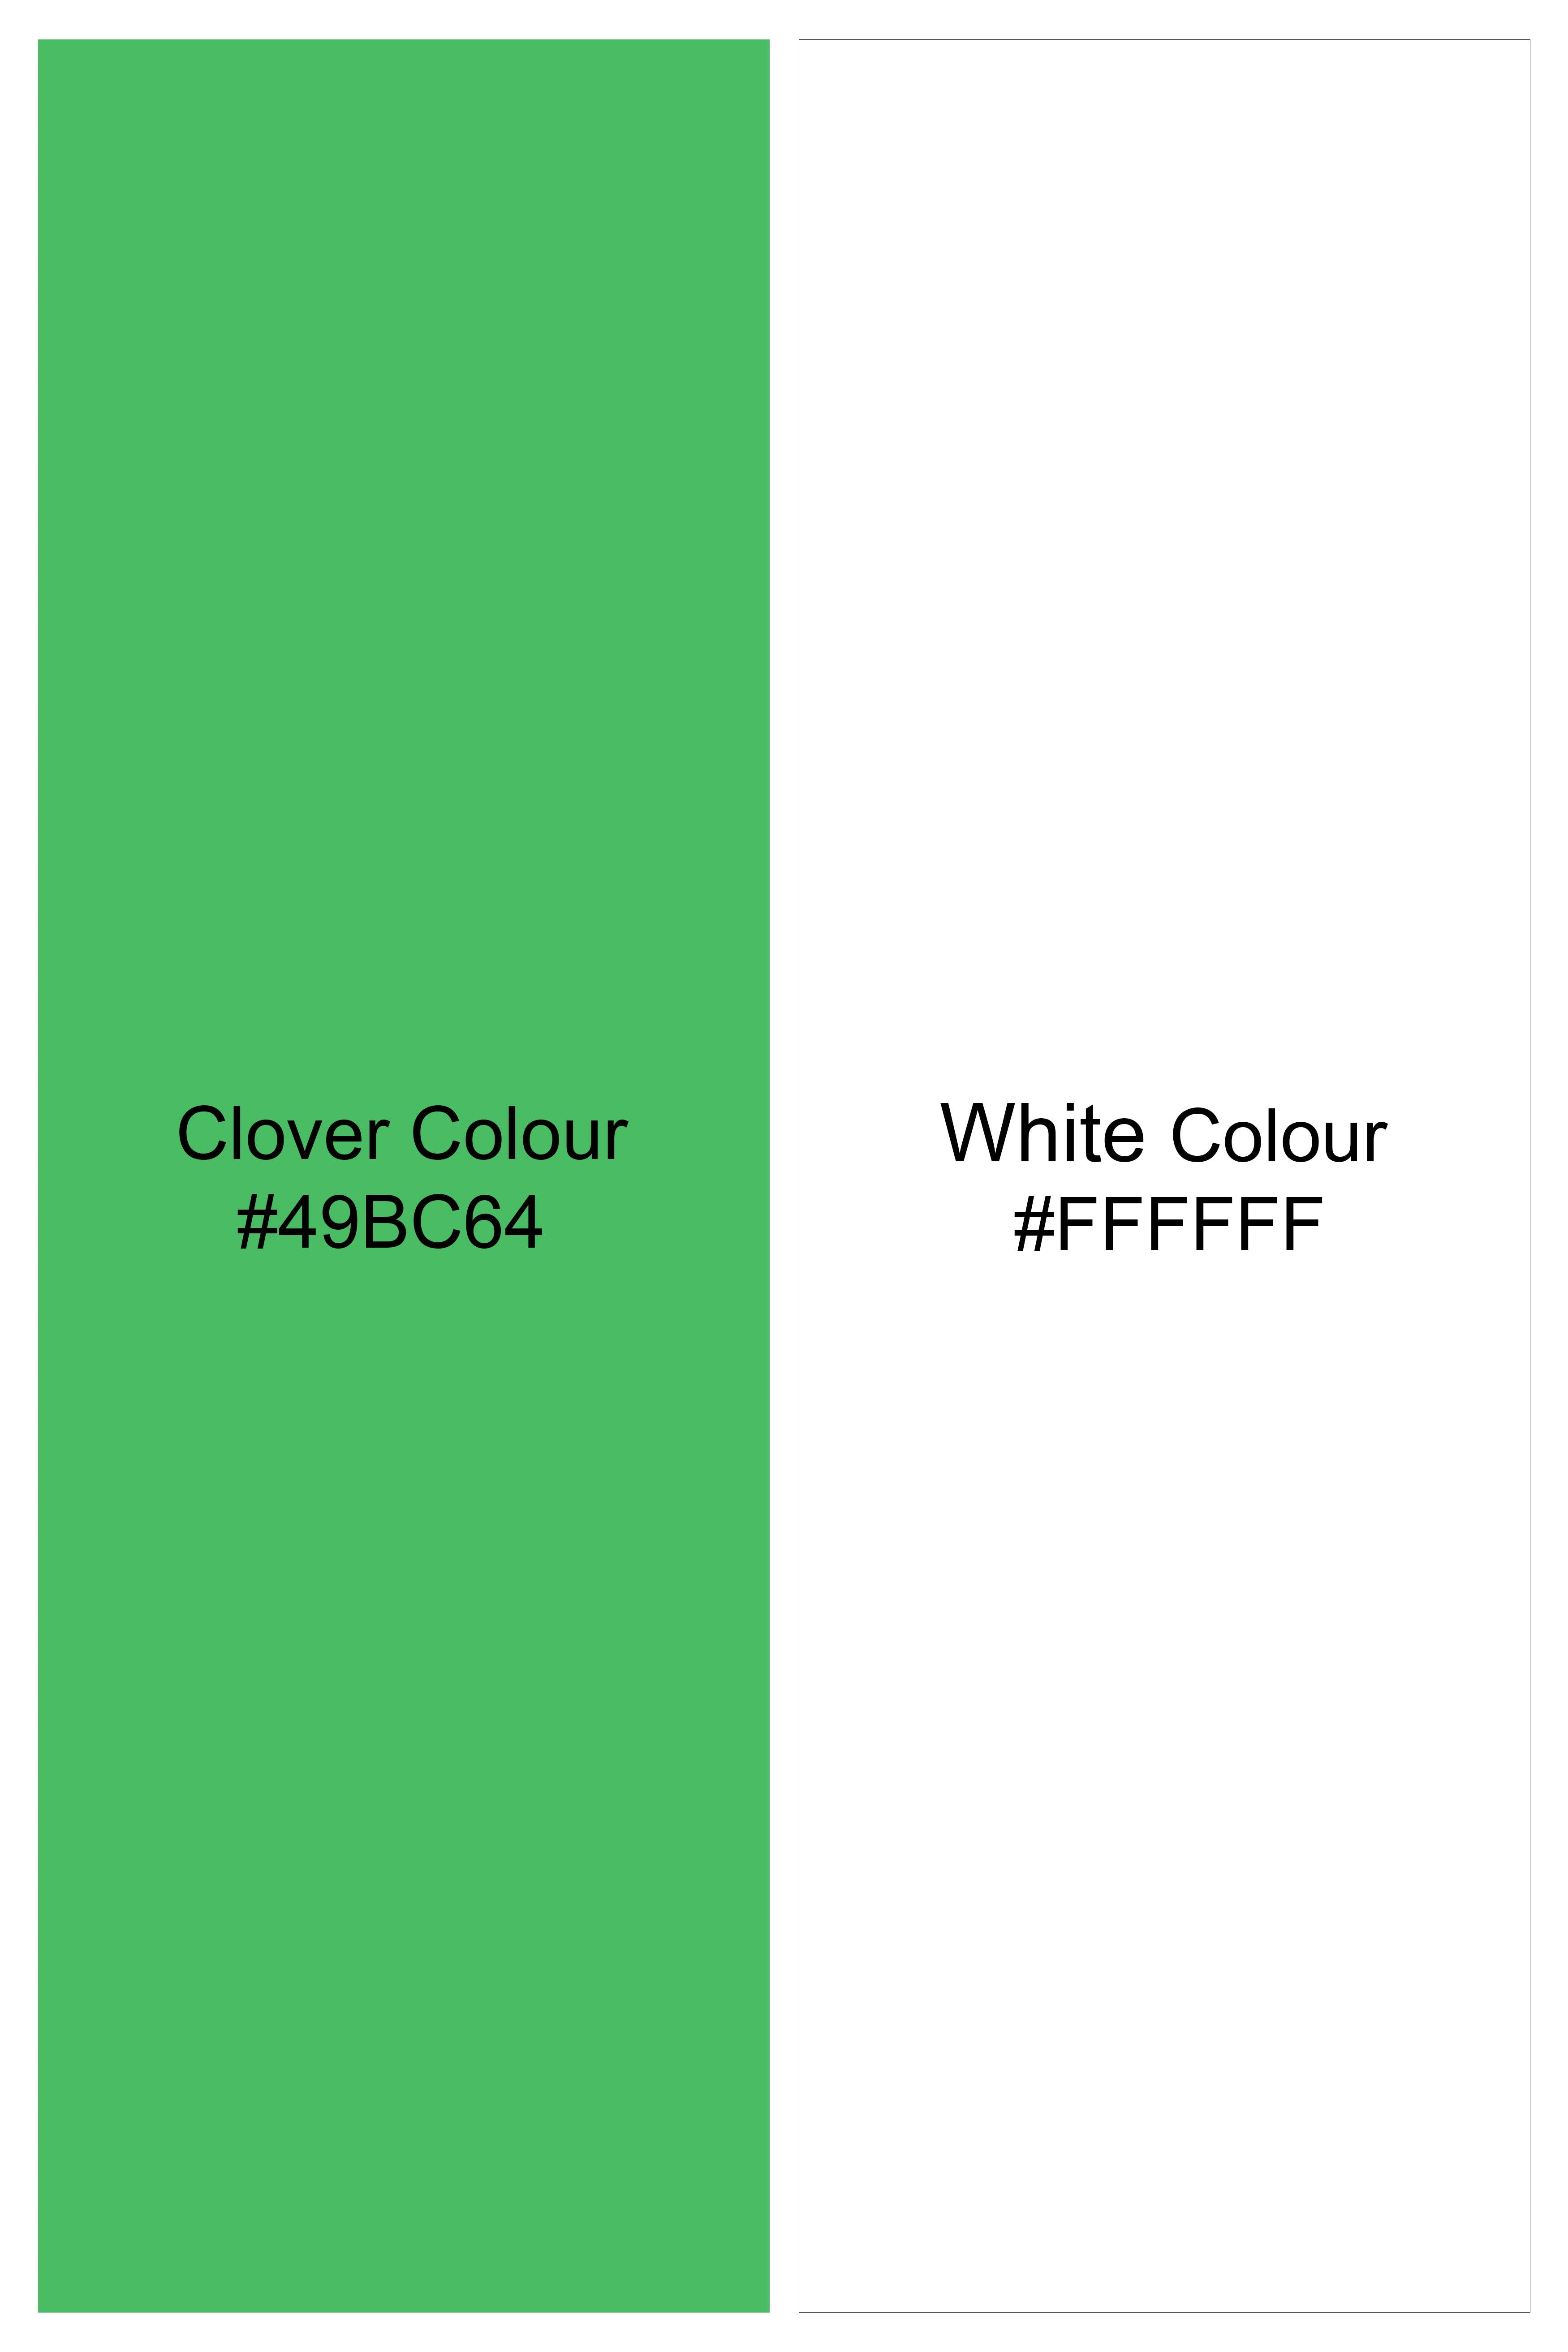 Clover Green and White Striped Premium Cotton Shirt